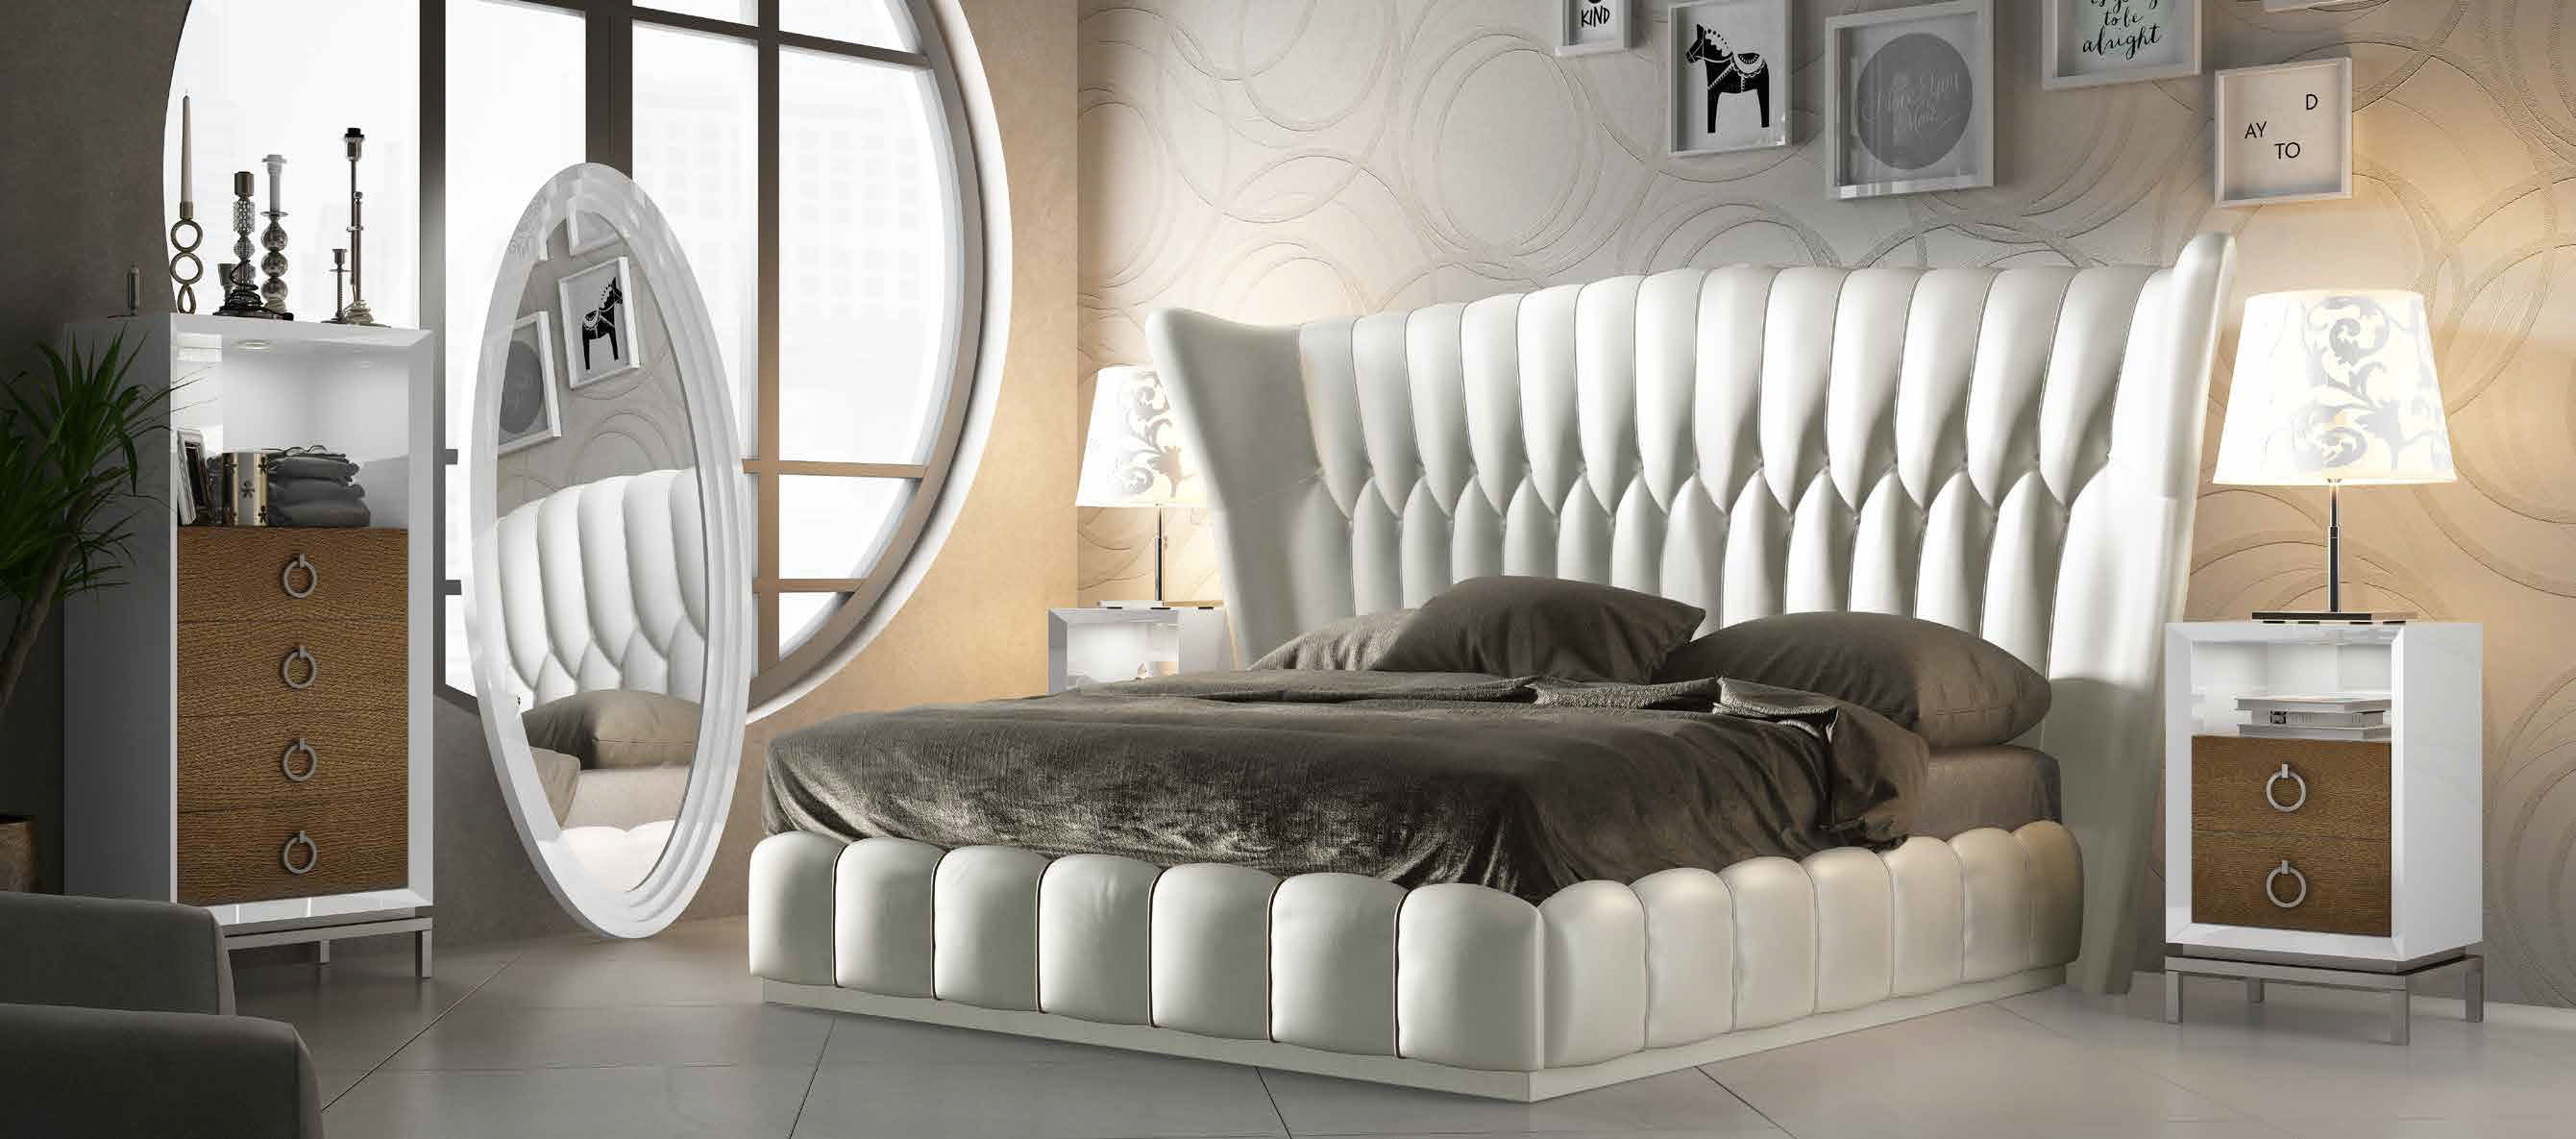 Brands Franco Furniture Bedrooms vol2, Spain DOR 50